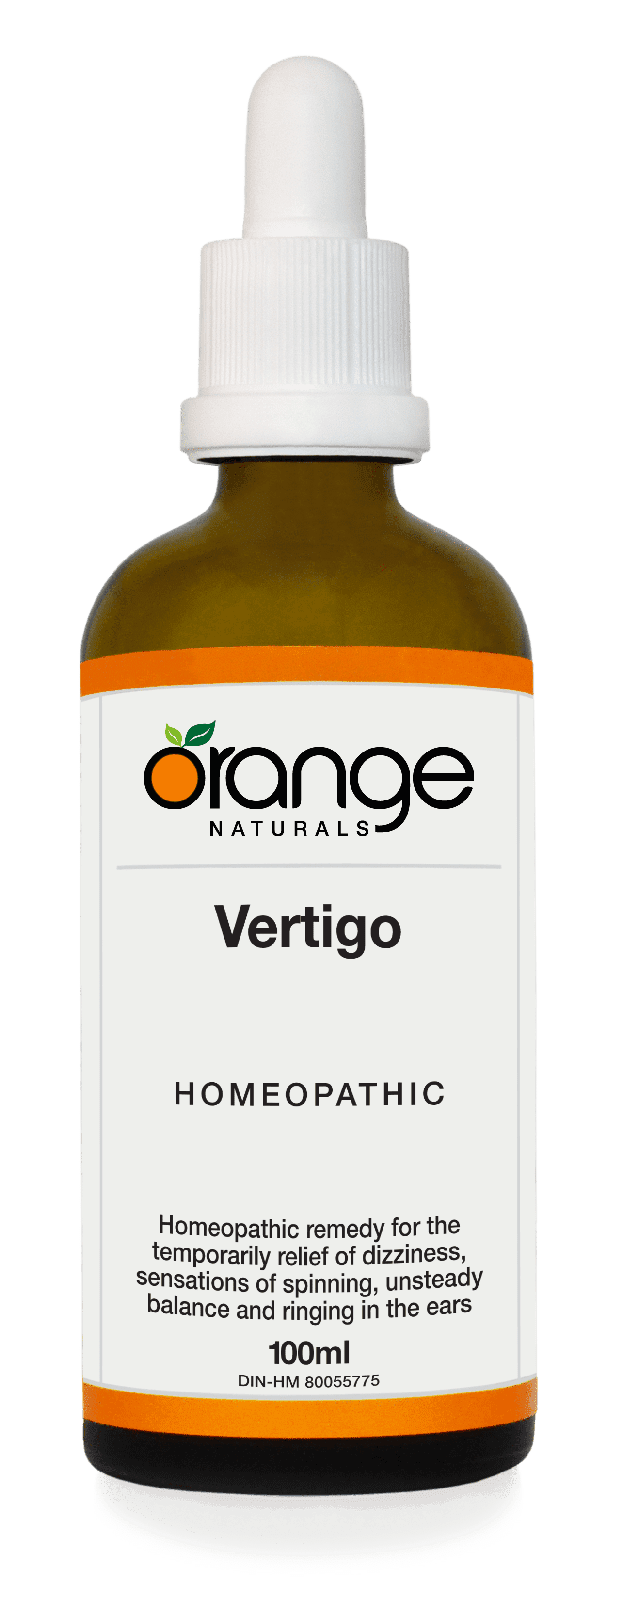 Orange Naturals Vertigo Homeopathic 100 mL Image 1